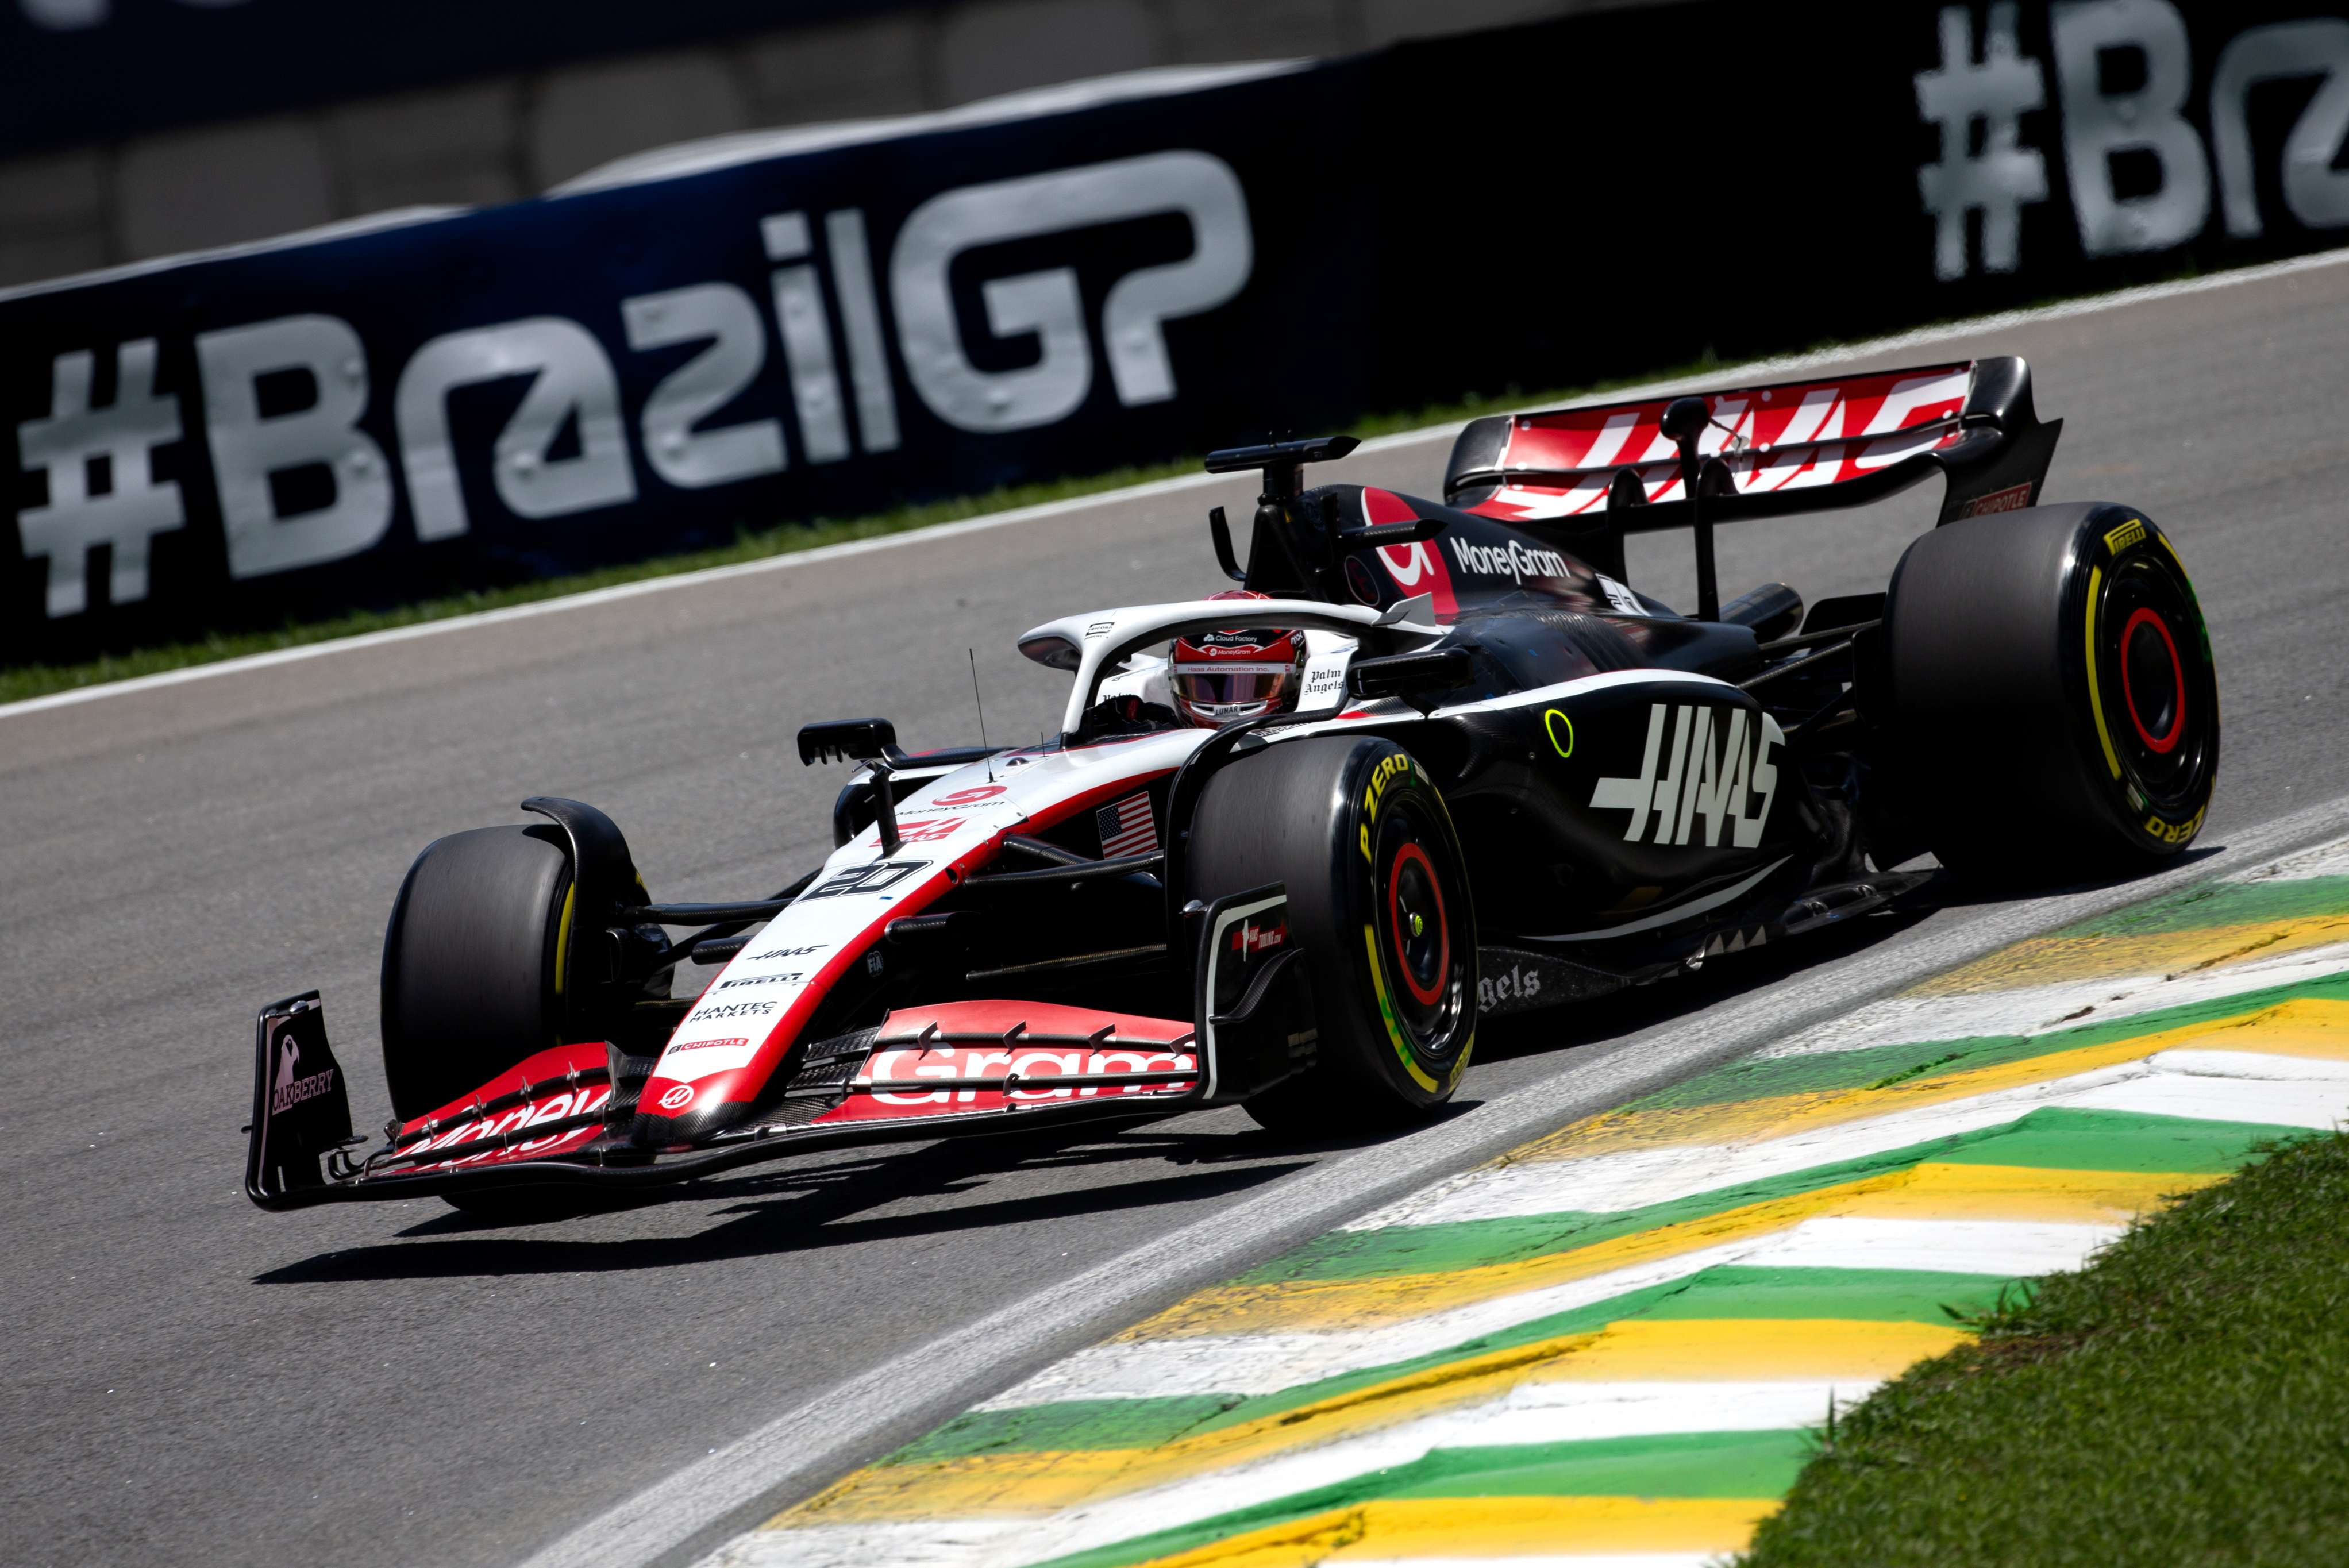 Brazil GP: Preview - Haas 